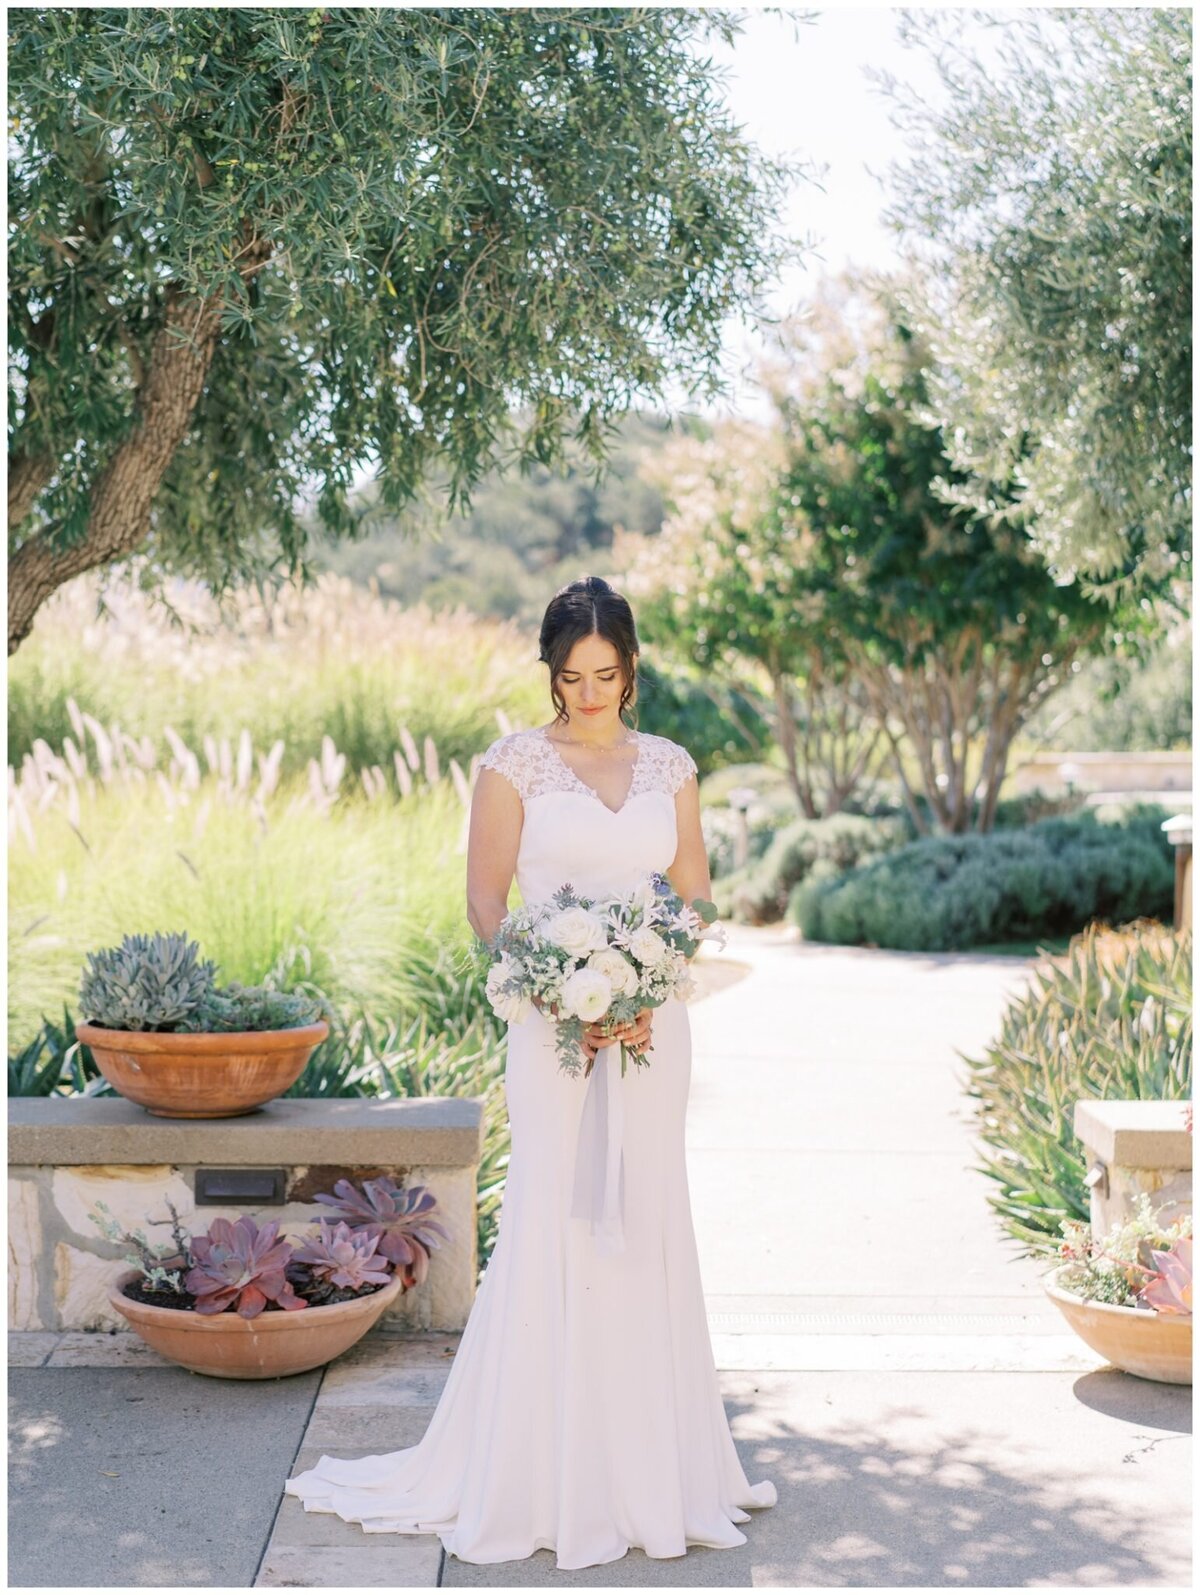 Katie-Jordan-Carmel-Valley-Holman-Ranch-Wedding-Cassie-Valente-Photography-0178-1541x2048